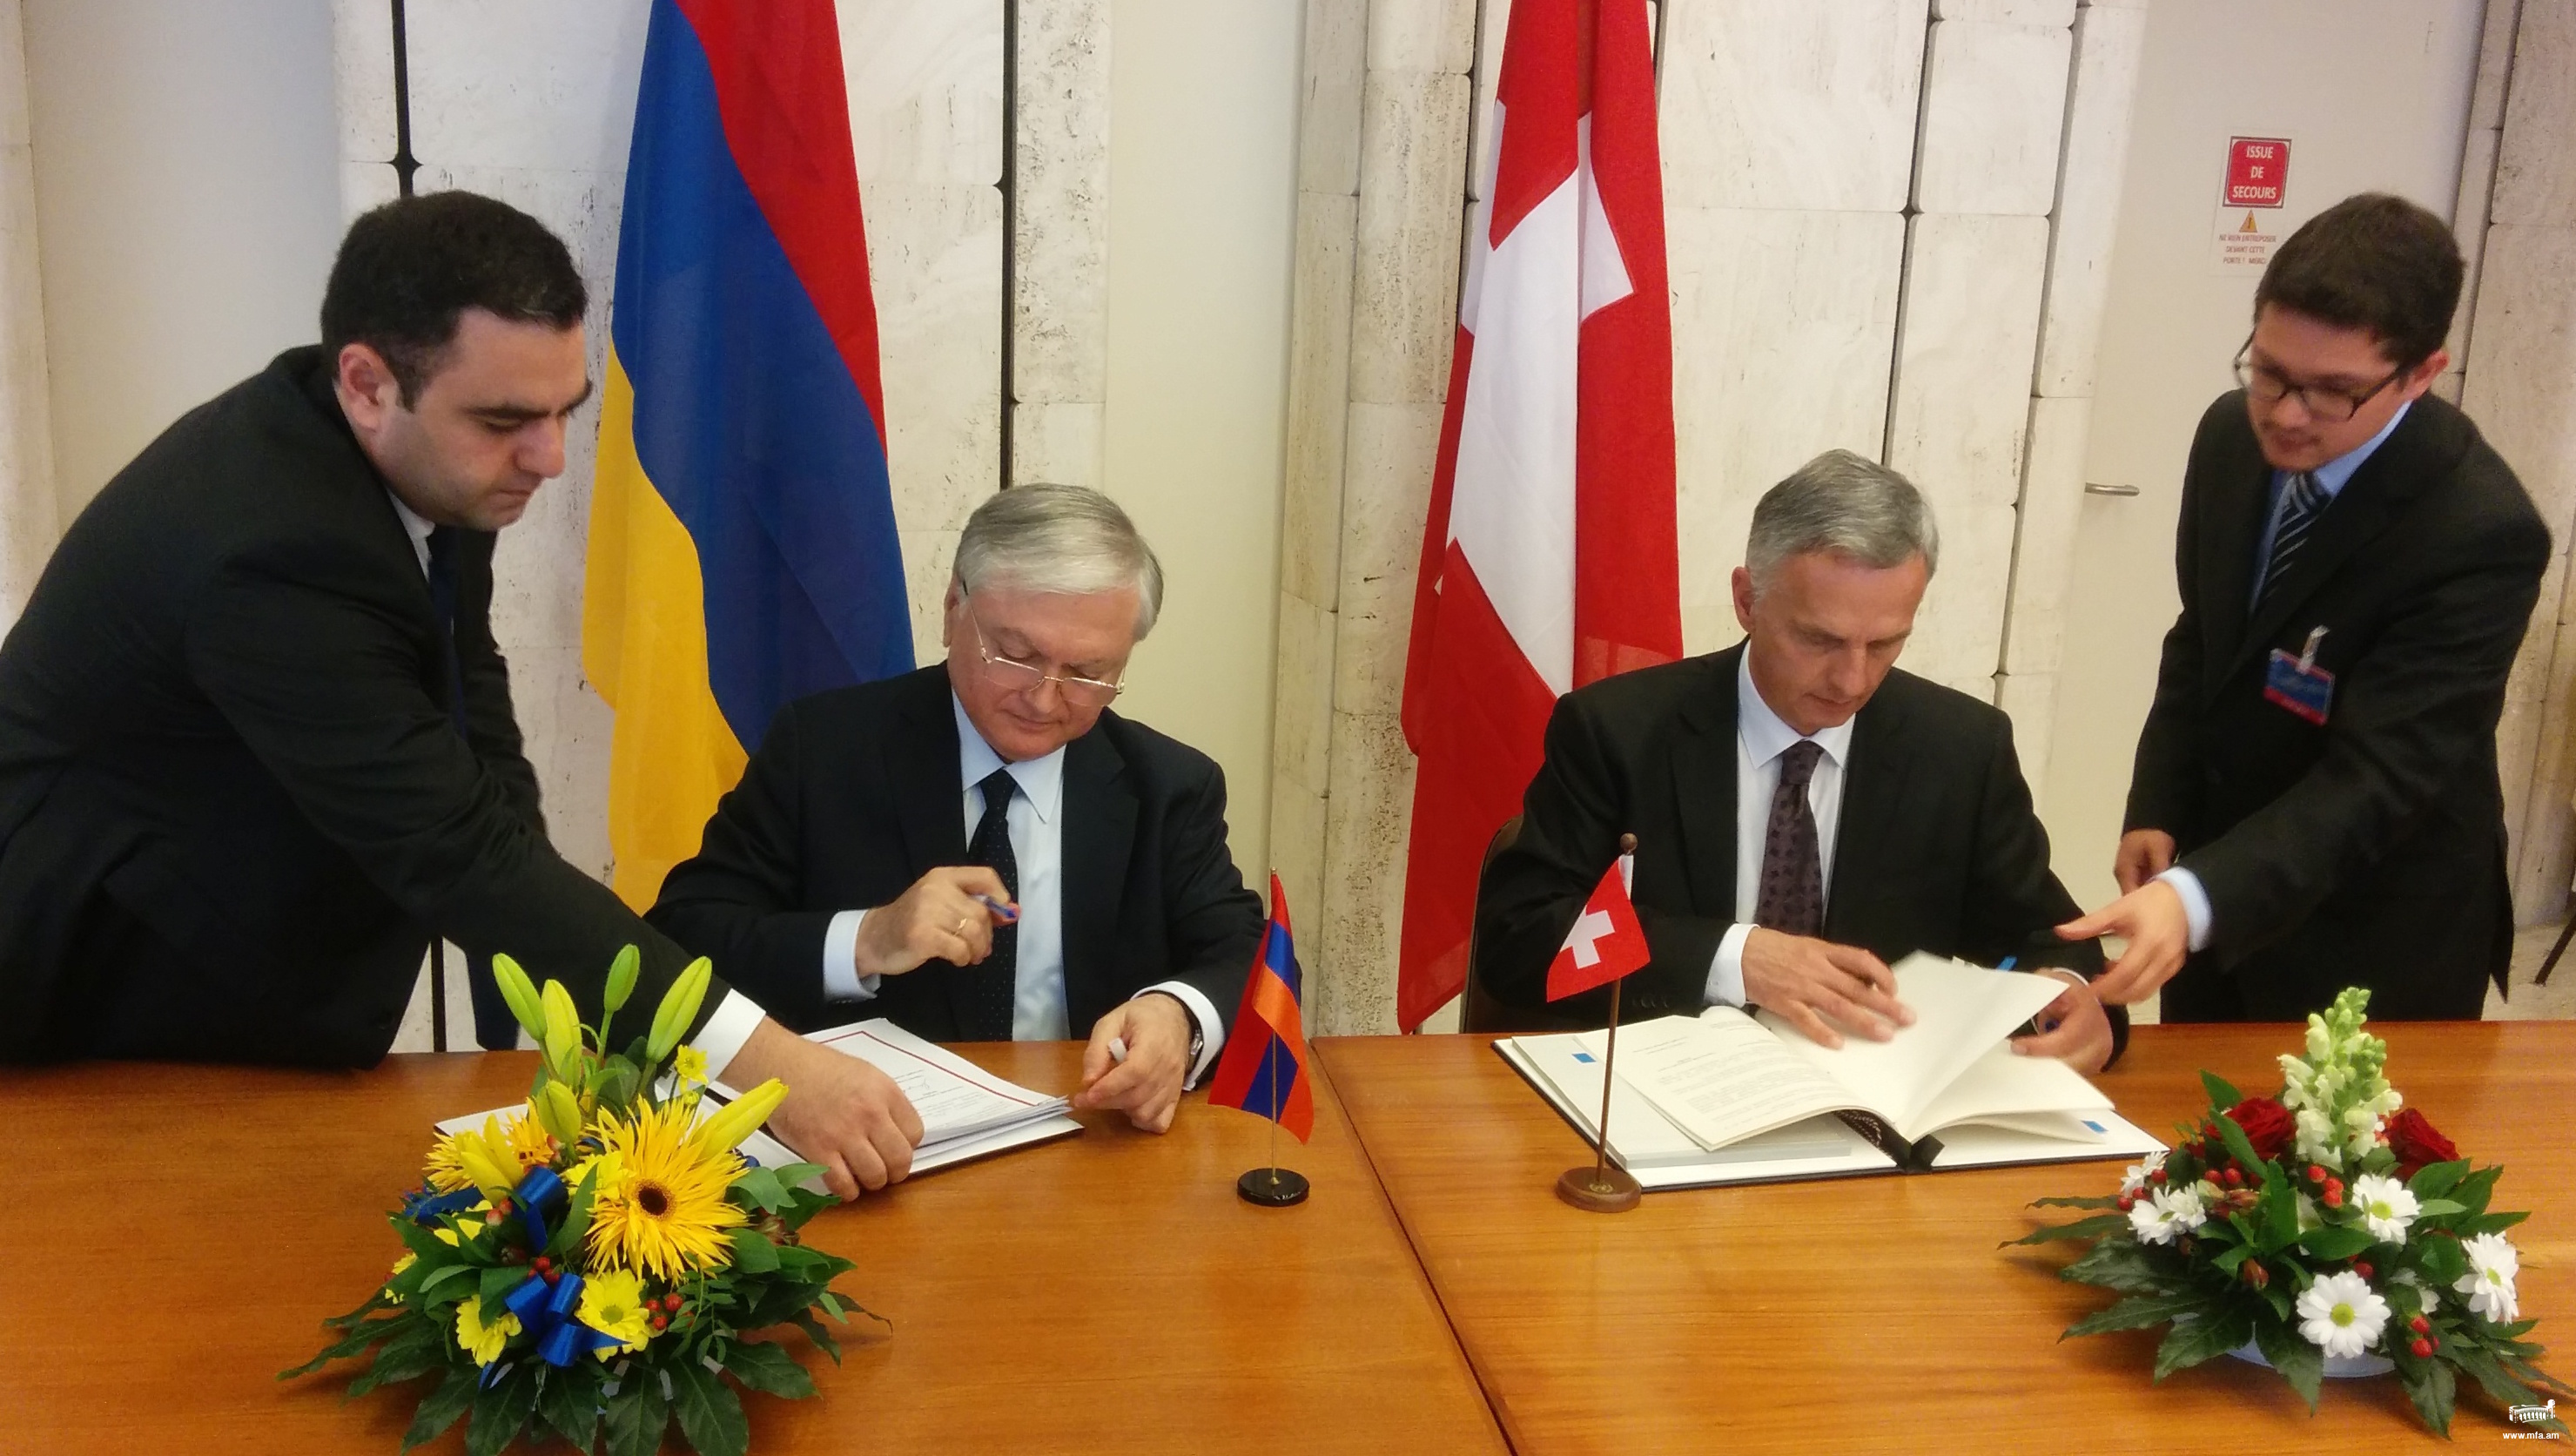 25th anniversary of the establishment of diplomatic relations between Armenia and Switzerland